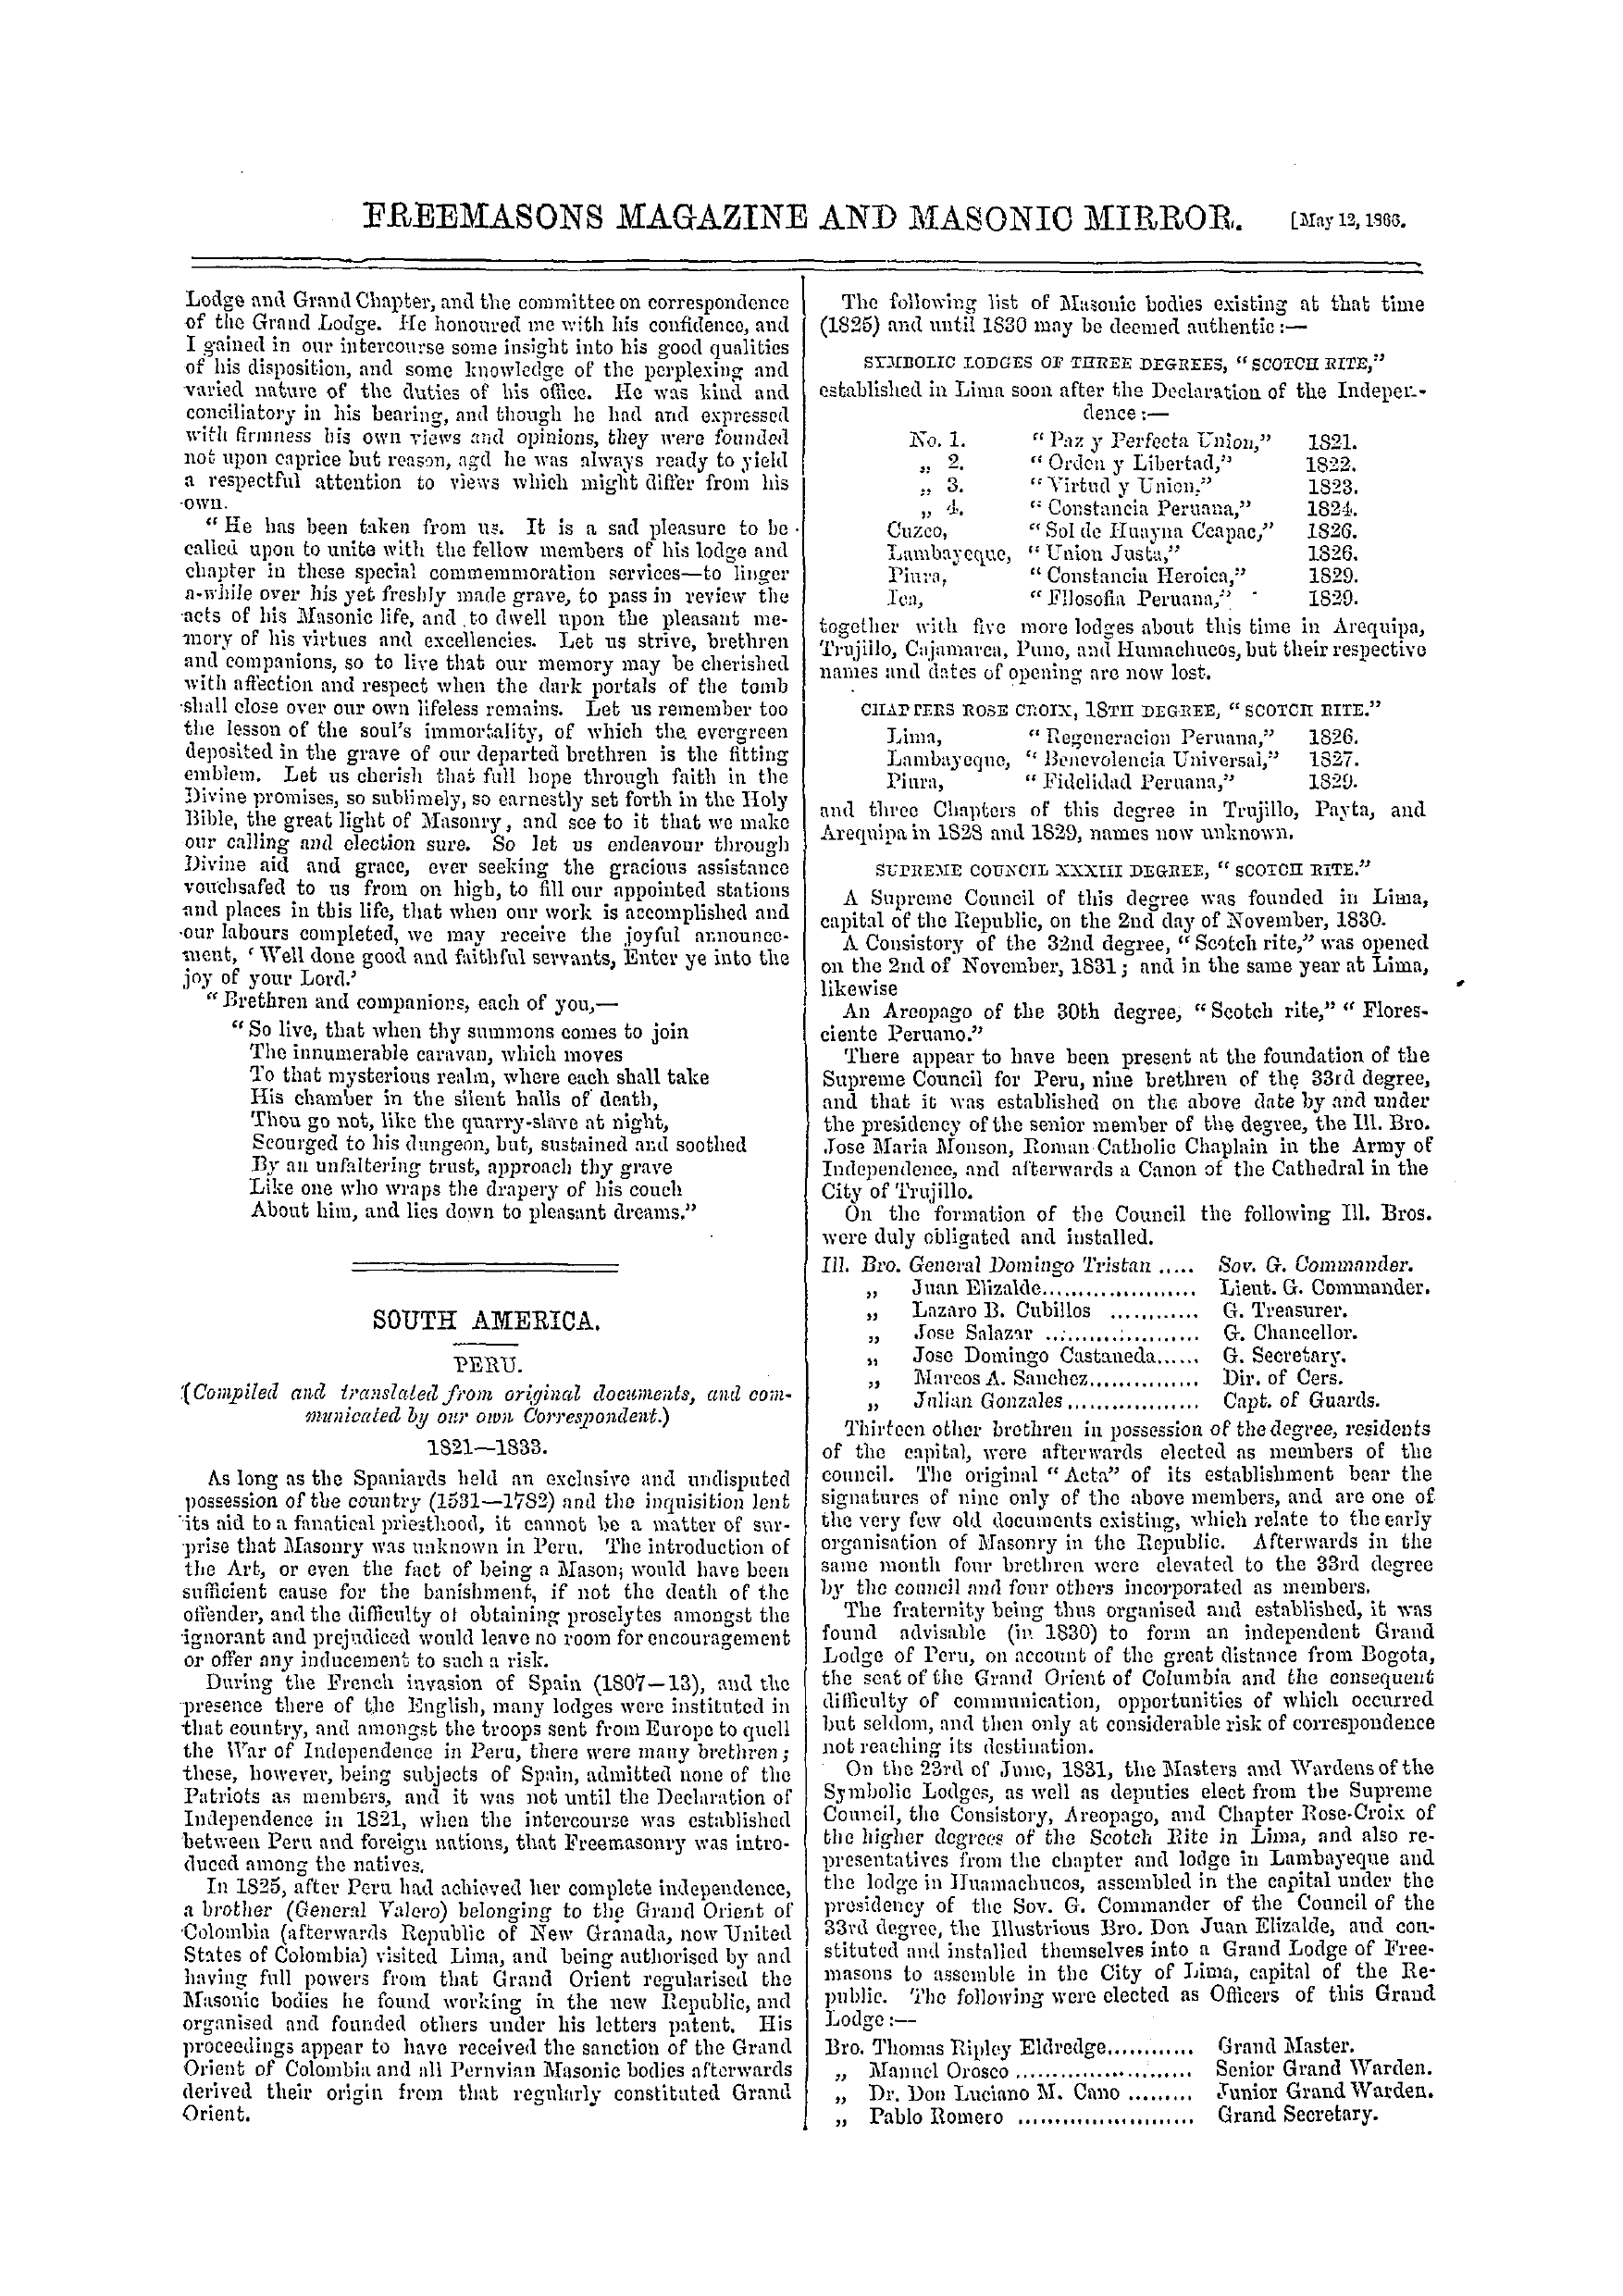 The Freemasons' Monthly Magazine: 1866-05-12 - South America.